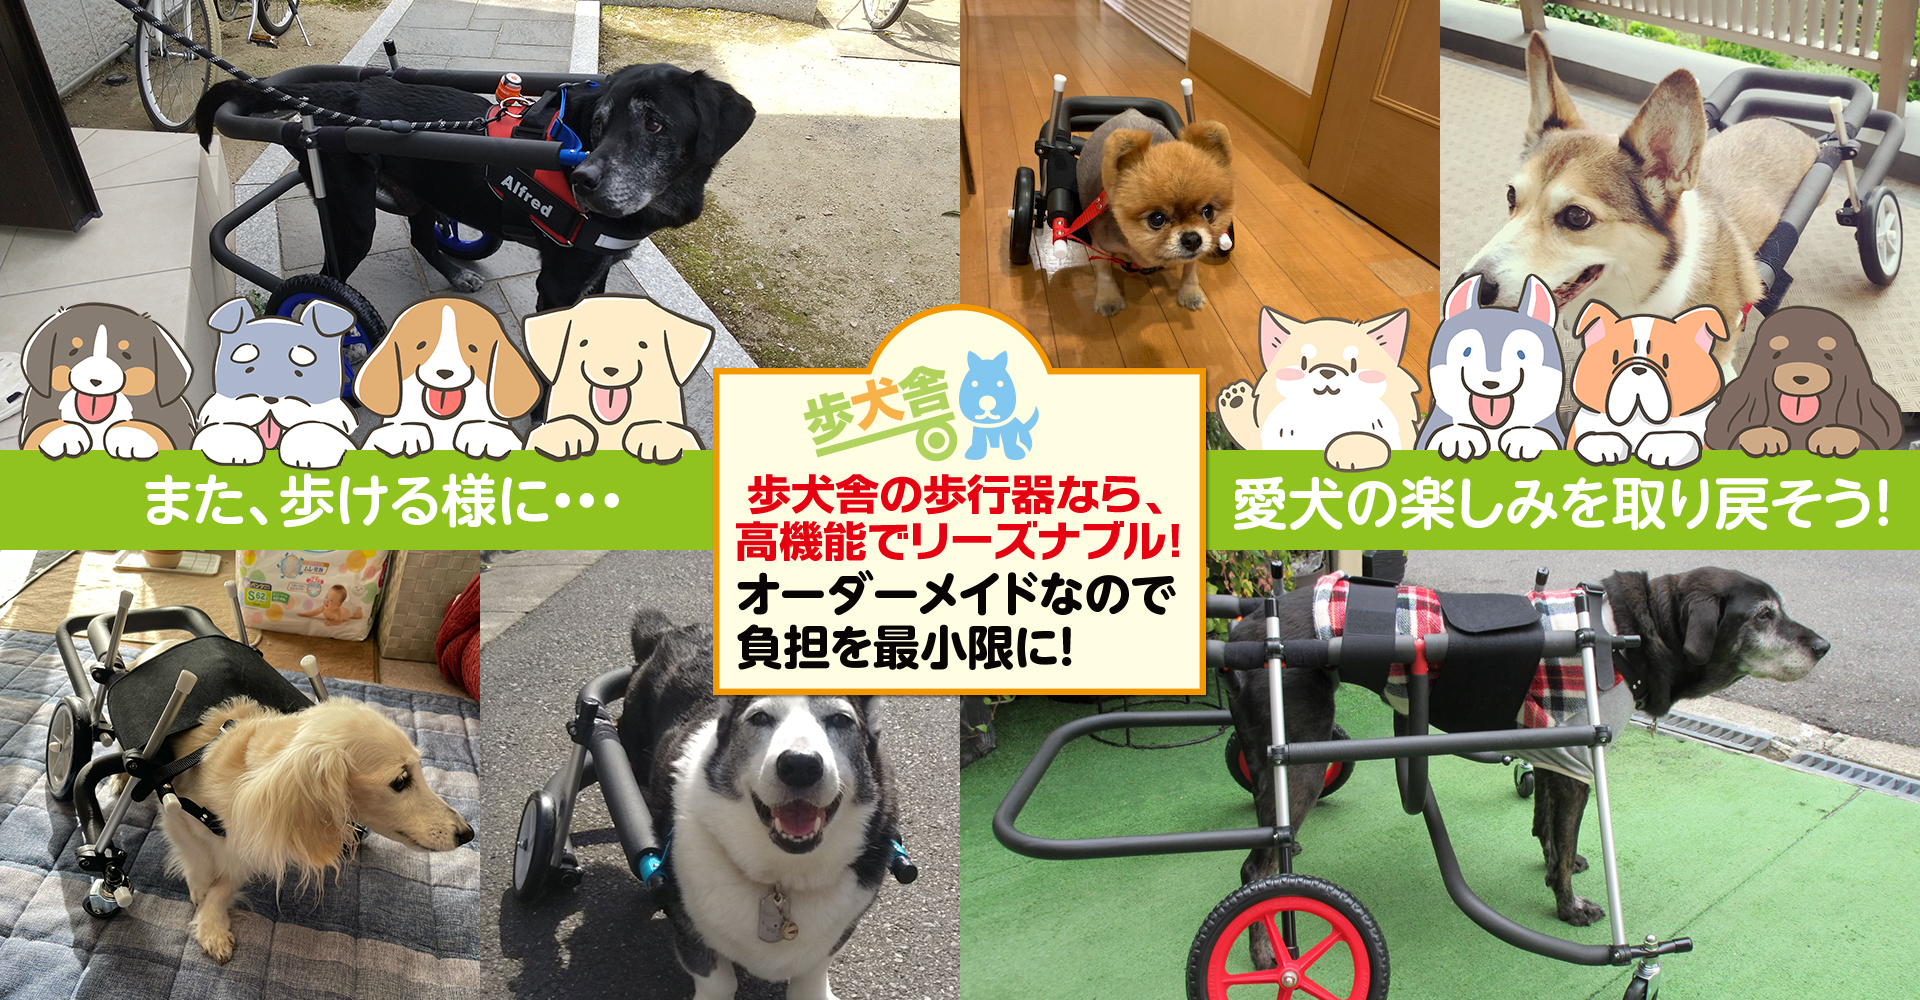 MIX犬4輪歩行器！リハビリ!食事補助!犬の歩行器！介護用!犬用車椅子!-